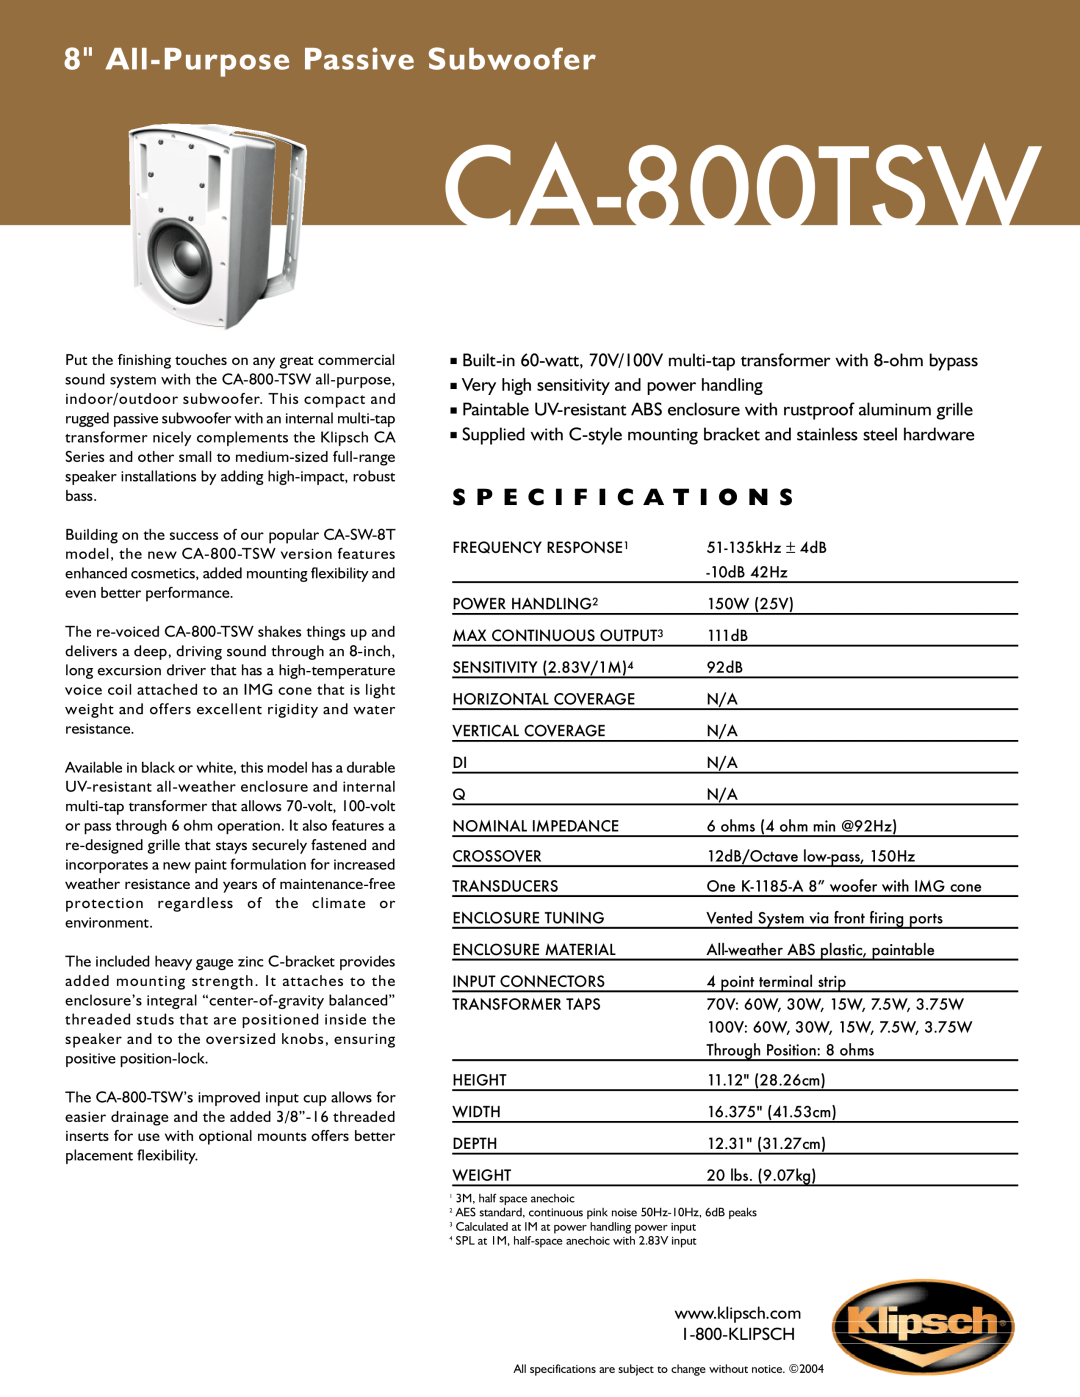 Klipsch CA-800TSW specifications All-PurposePassive Subwoofer, S P E C I F I C A T I O N S 